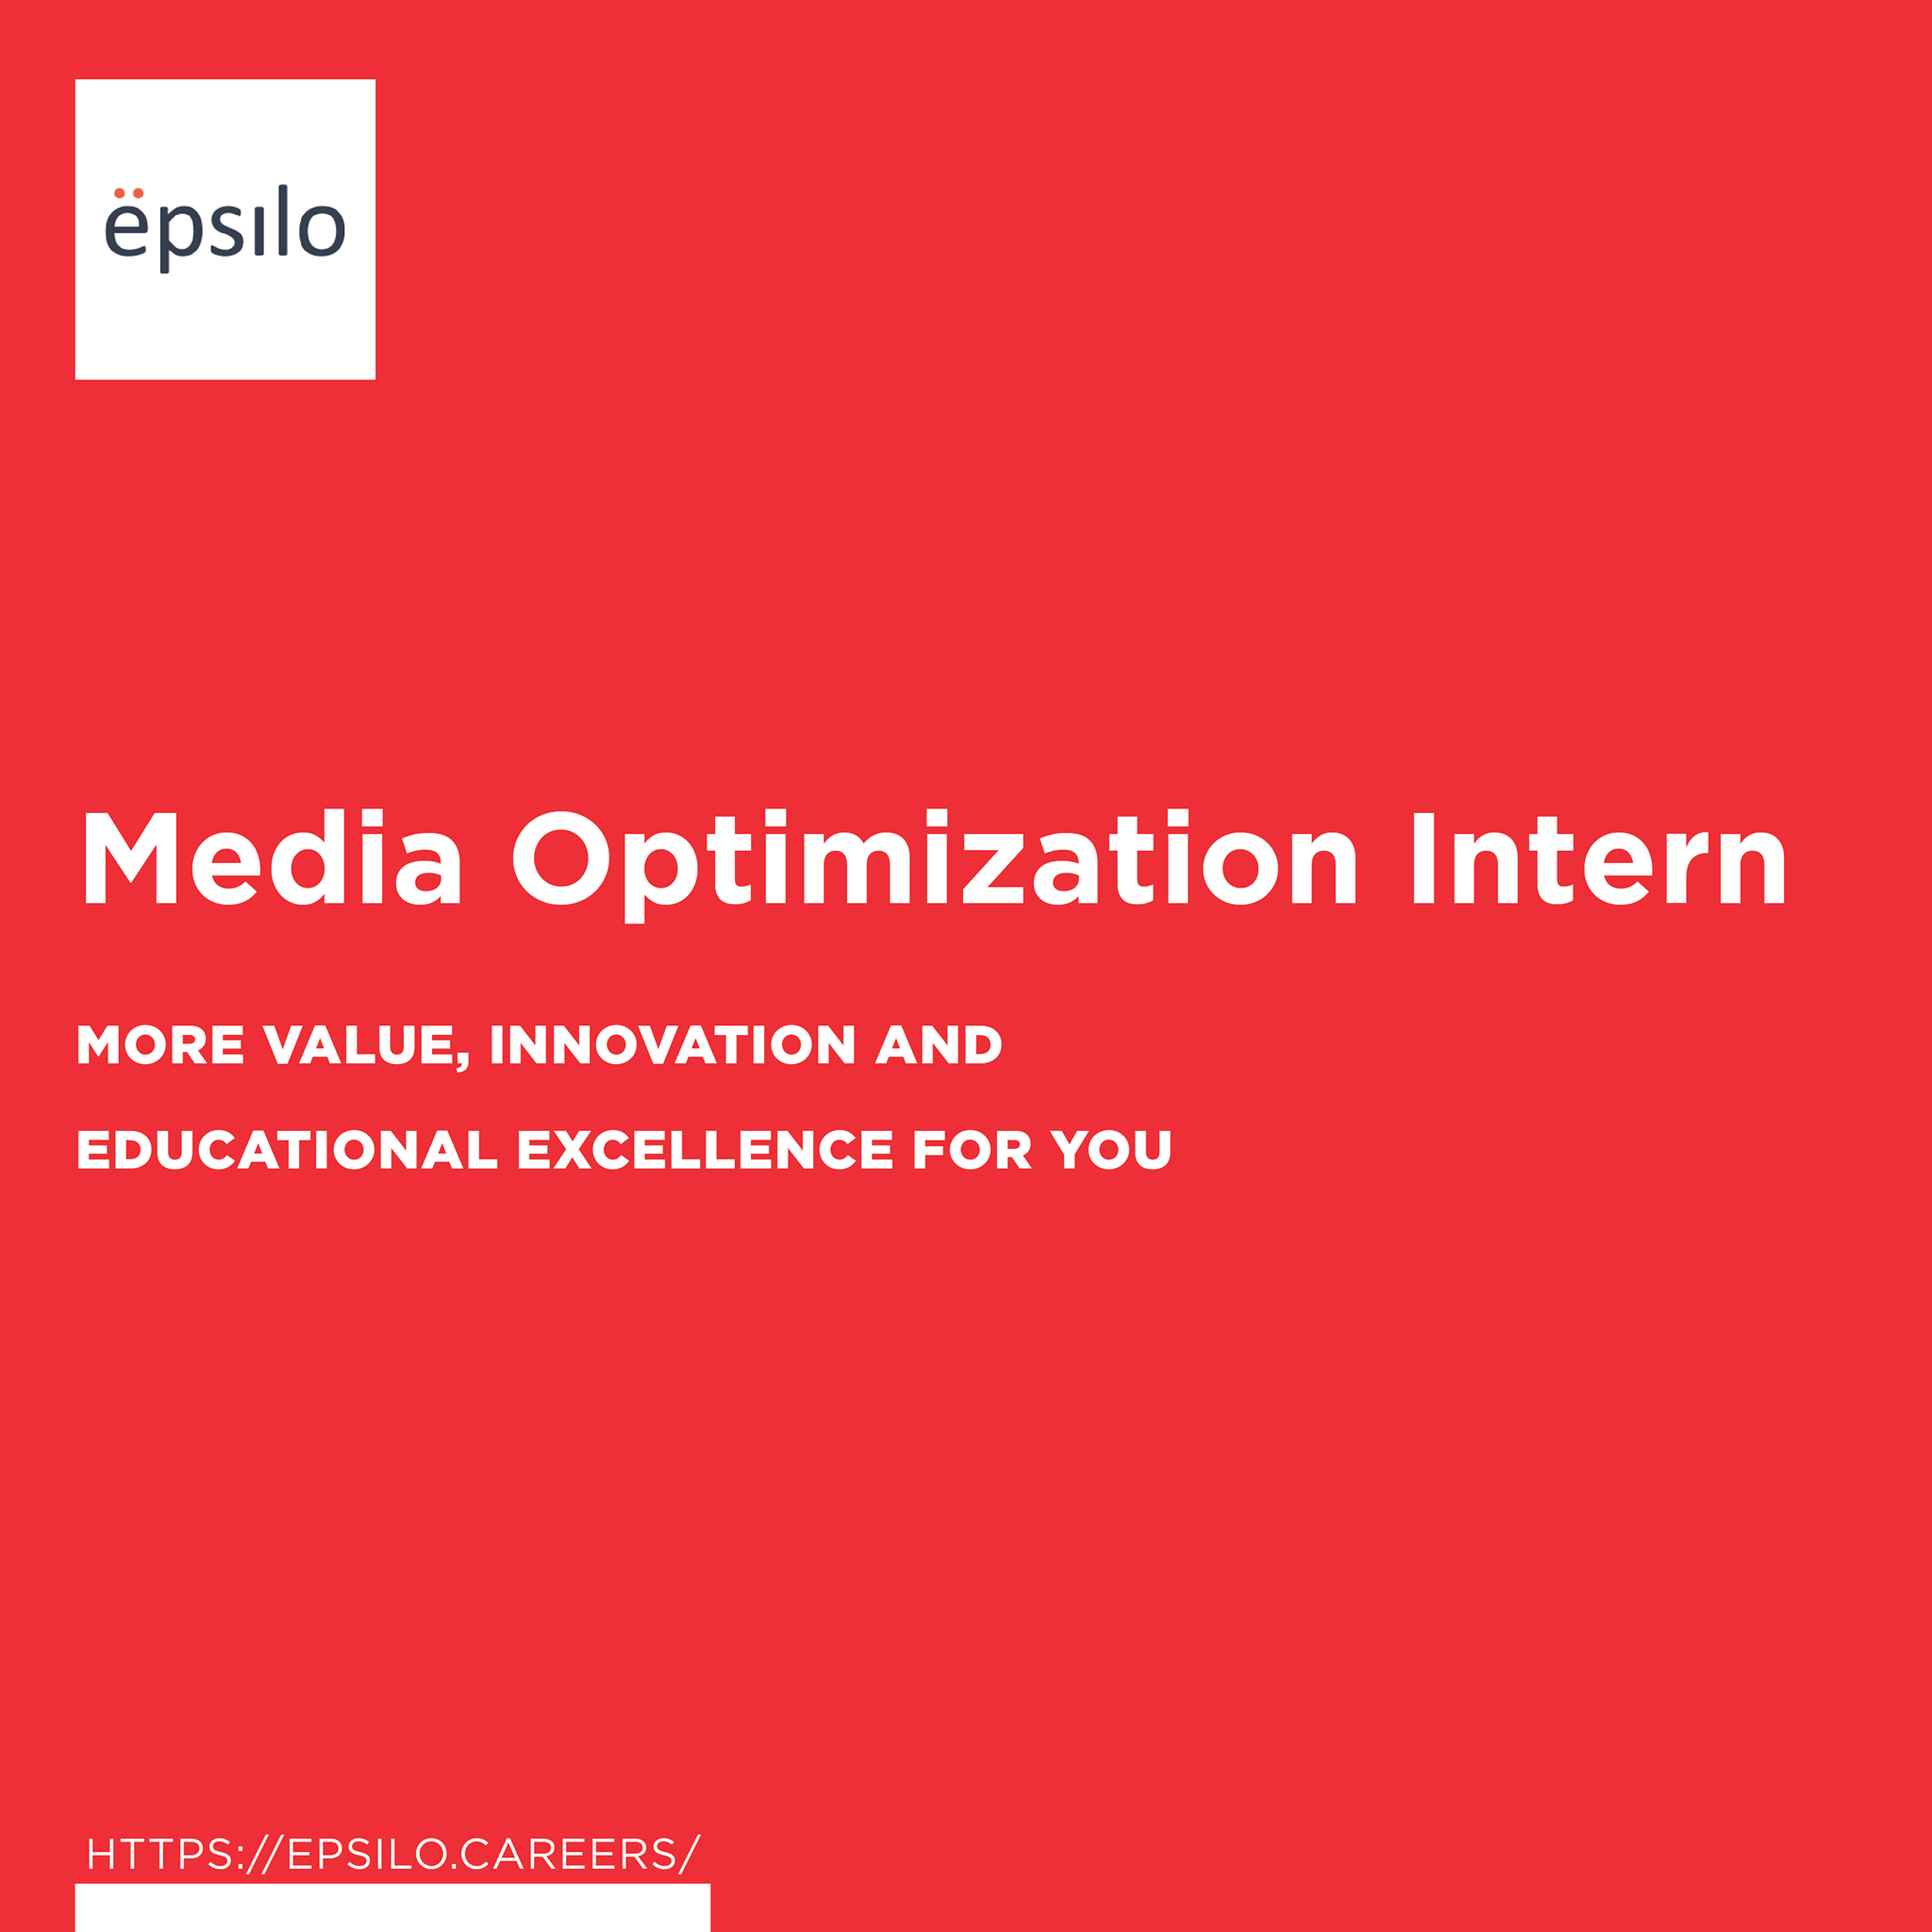 Thực tập sinh Media Optimization tại Công ty Epsilo.io